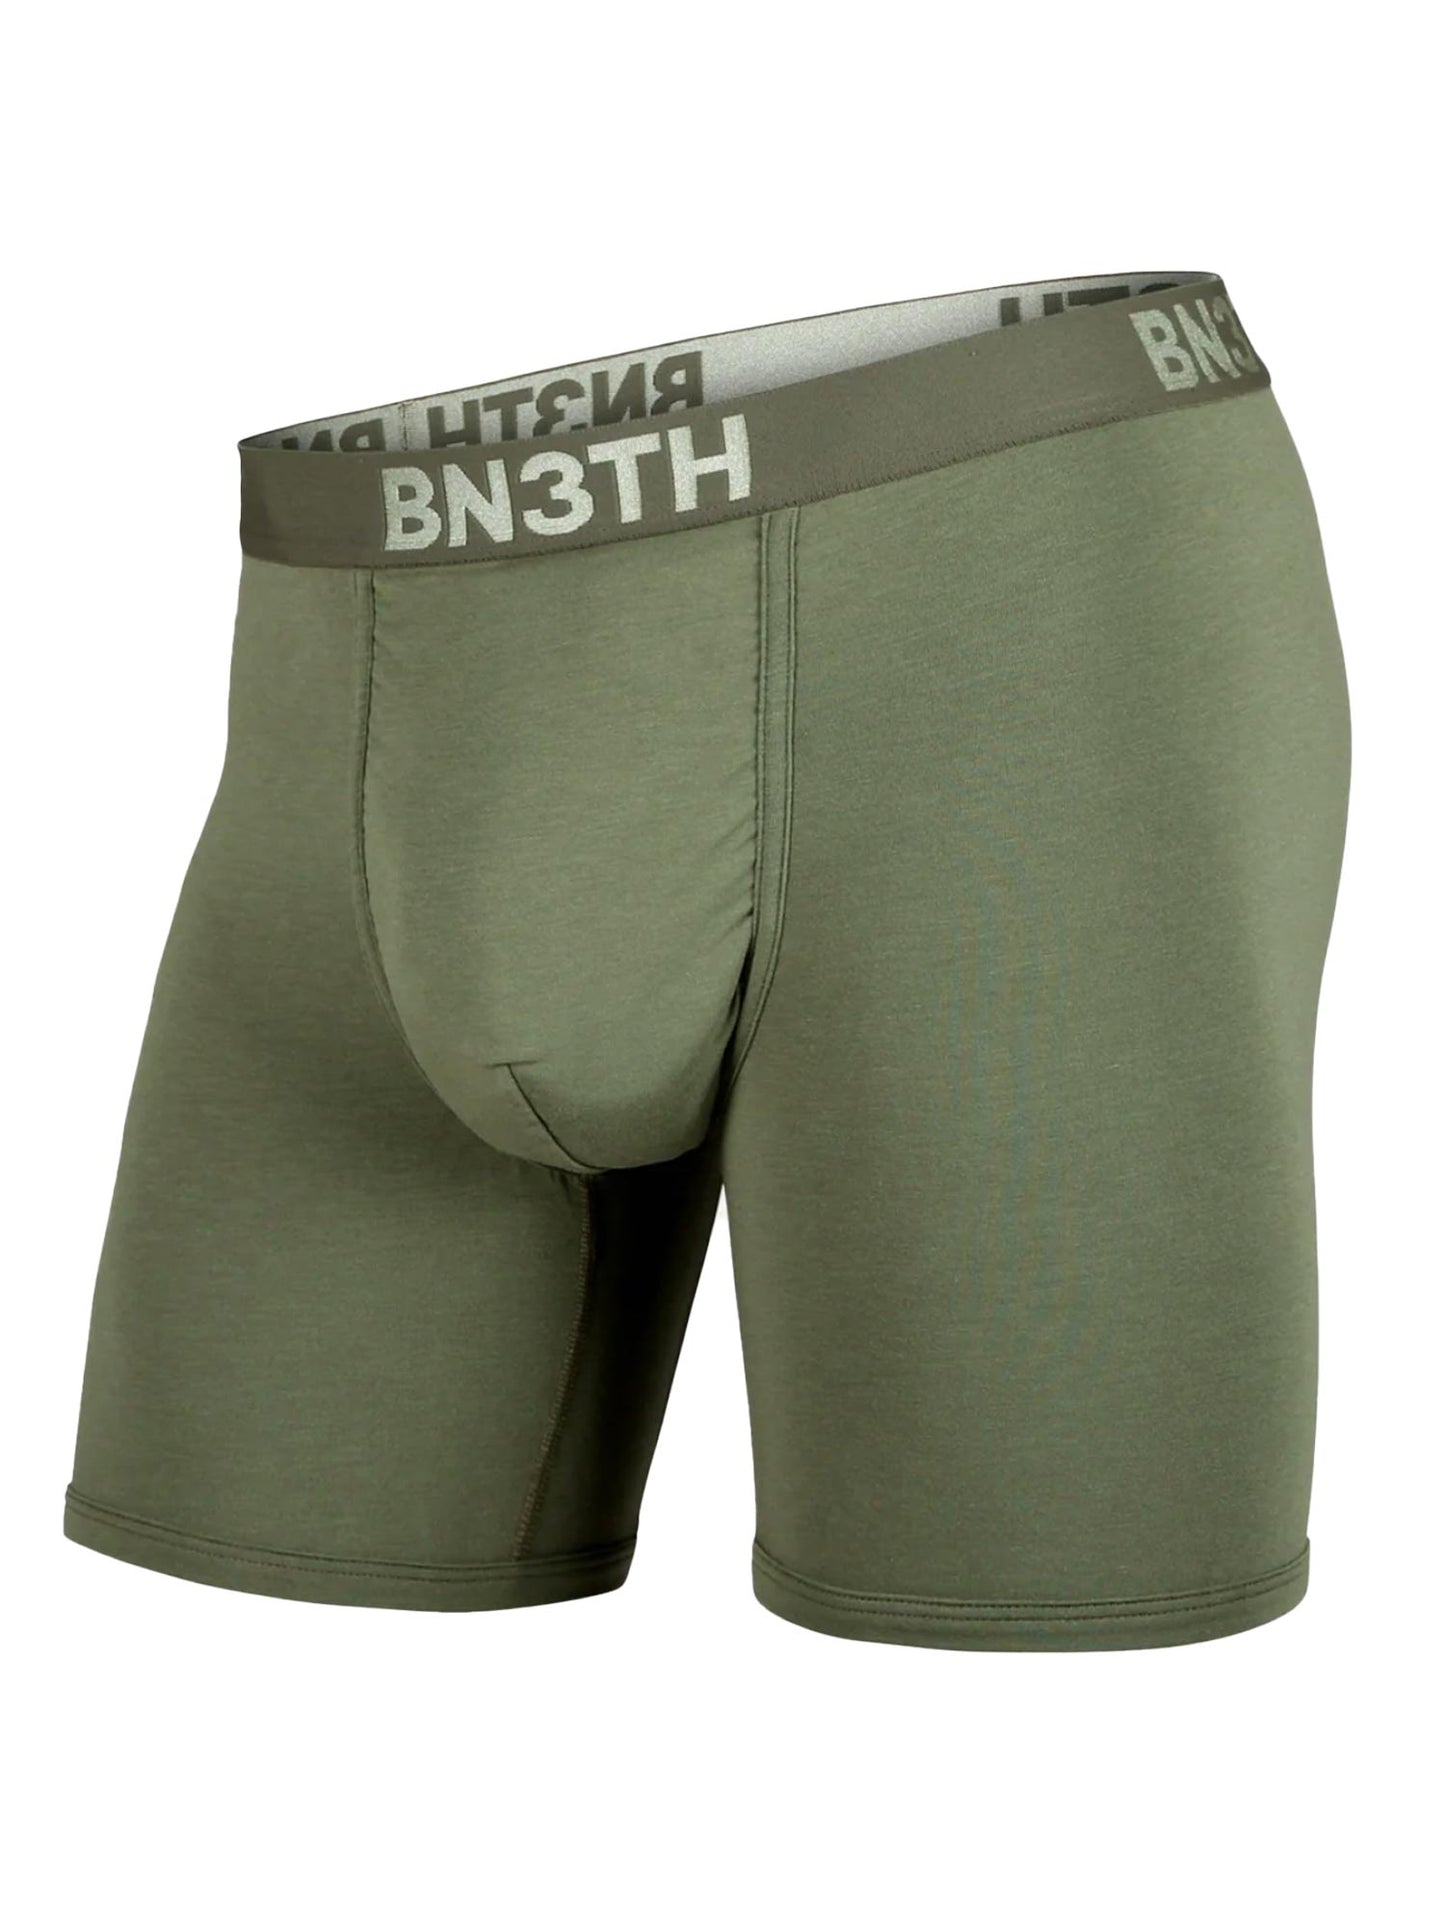 BN3TH Classic Boxer Brief - Solid - Men's